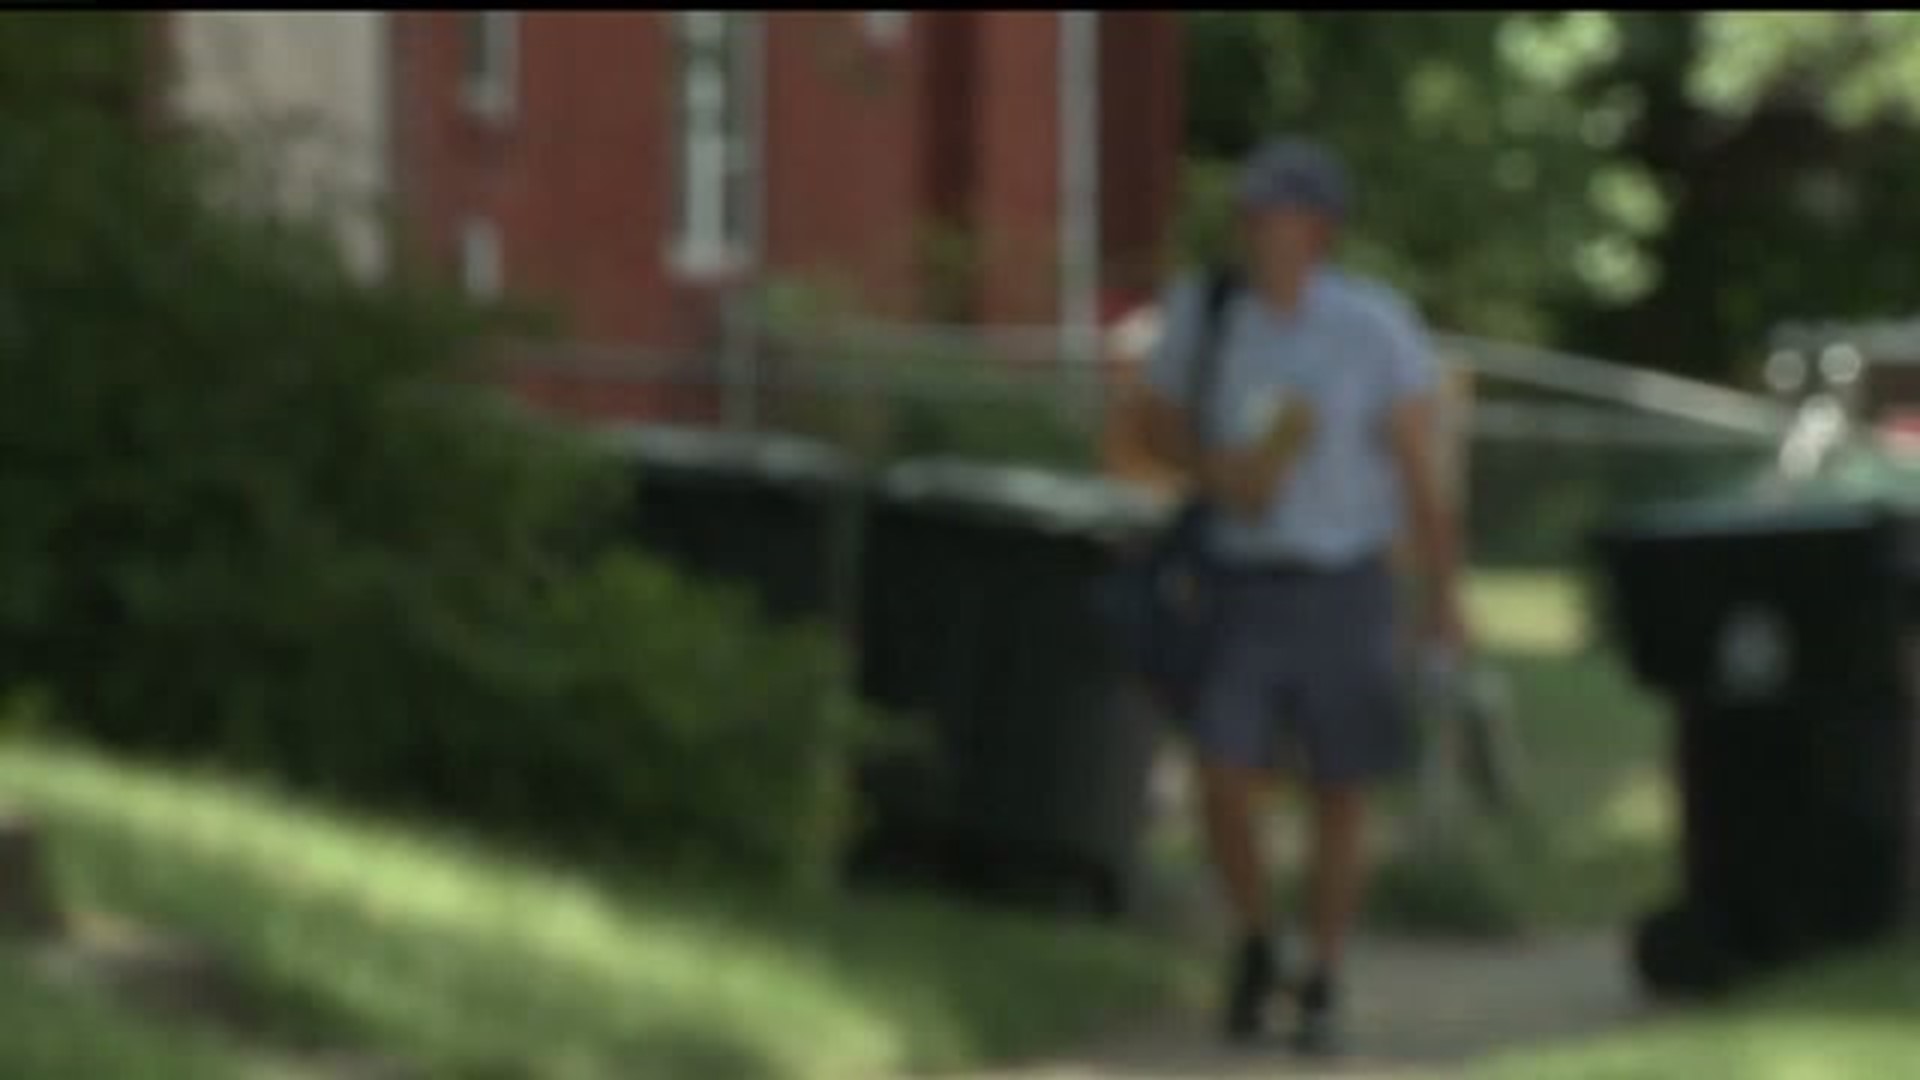 US Postal worker assaulted in Harrisburg